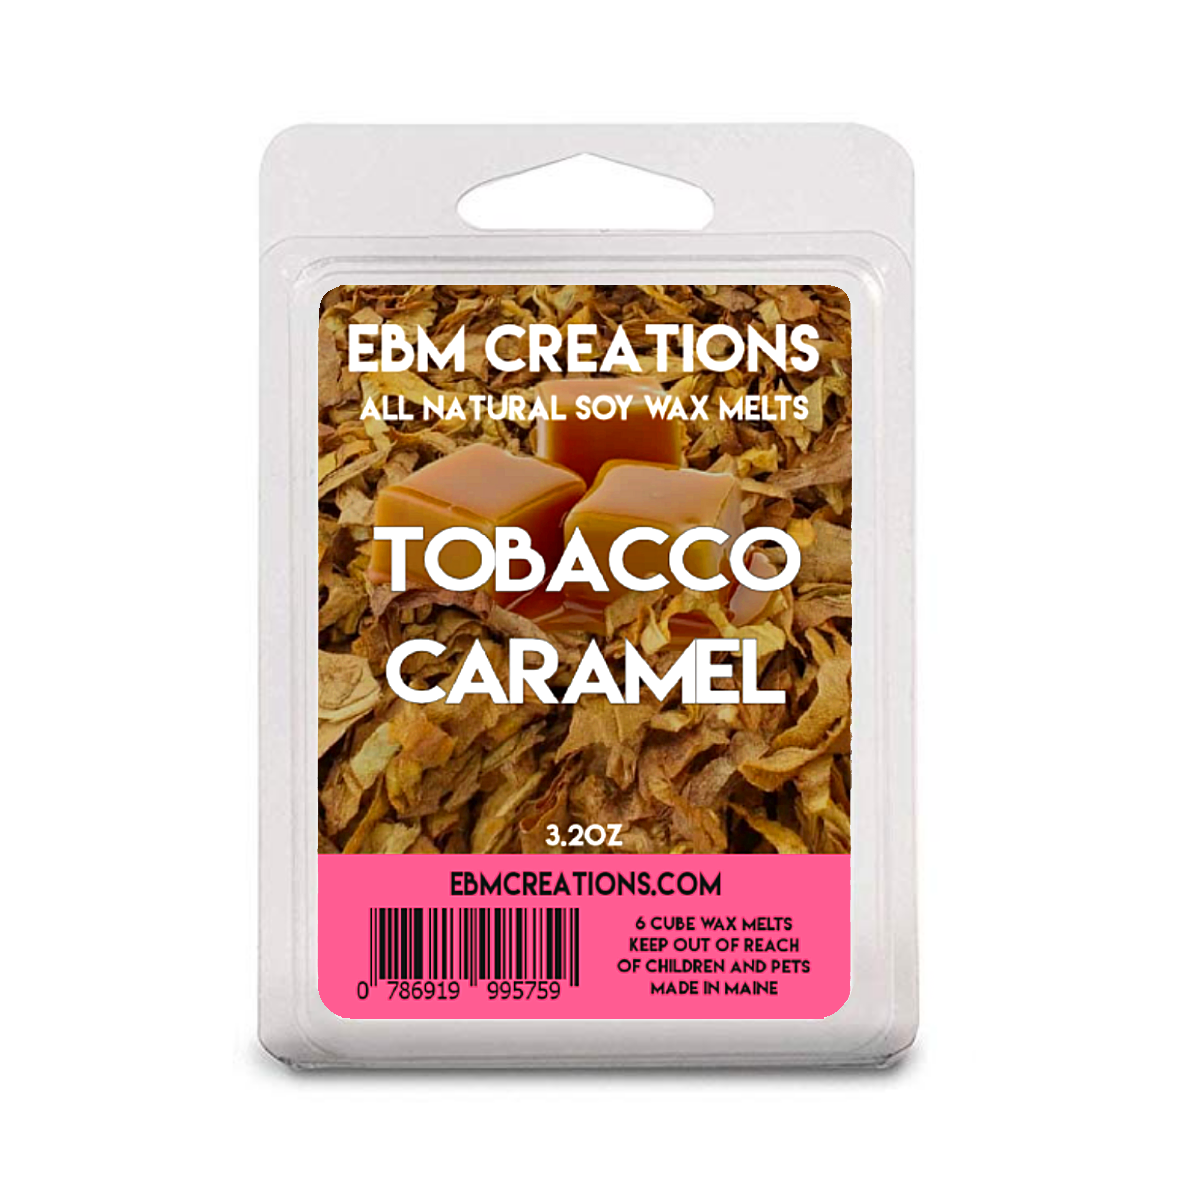 Tobacco Caramel - 3.2 oz Clamshell